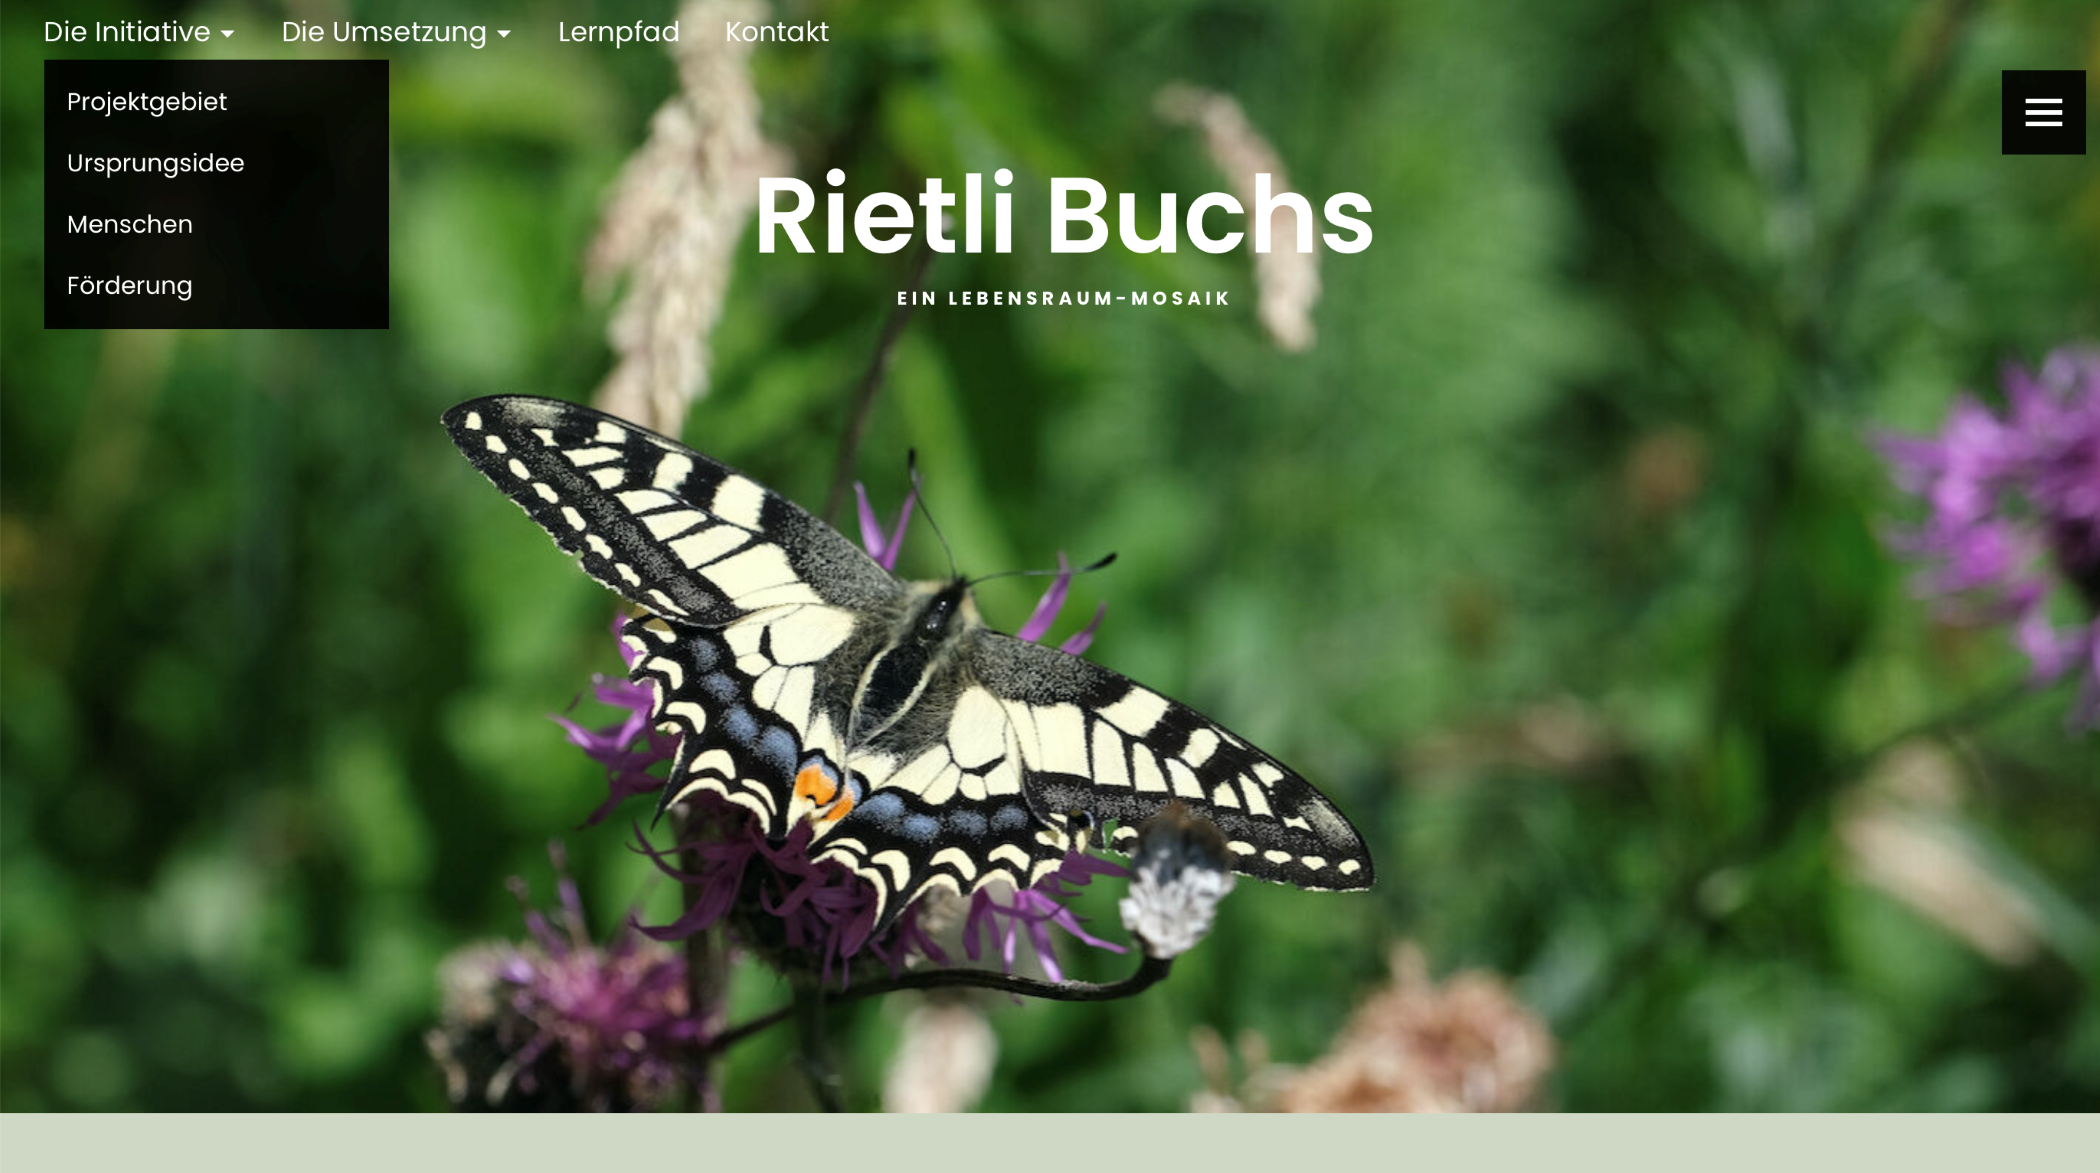 Rietli Buchs – une mosaïque d’habitats